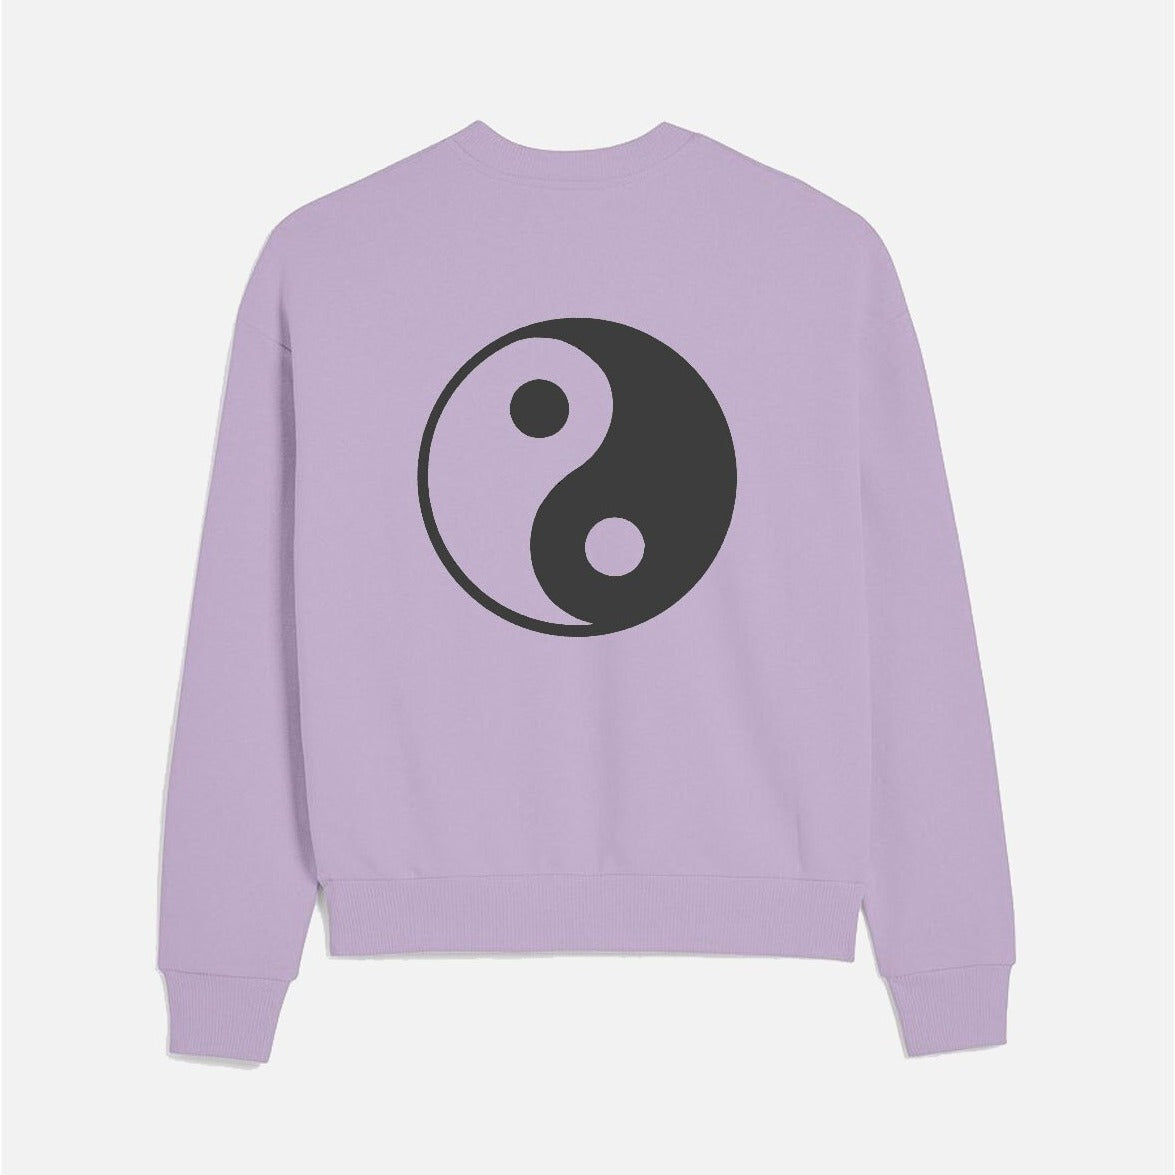 ying yang sweatshirt in lavendar